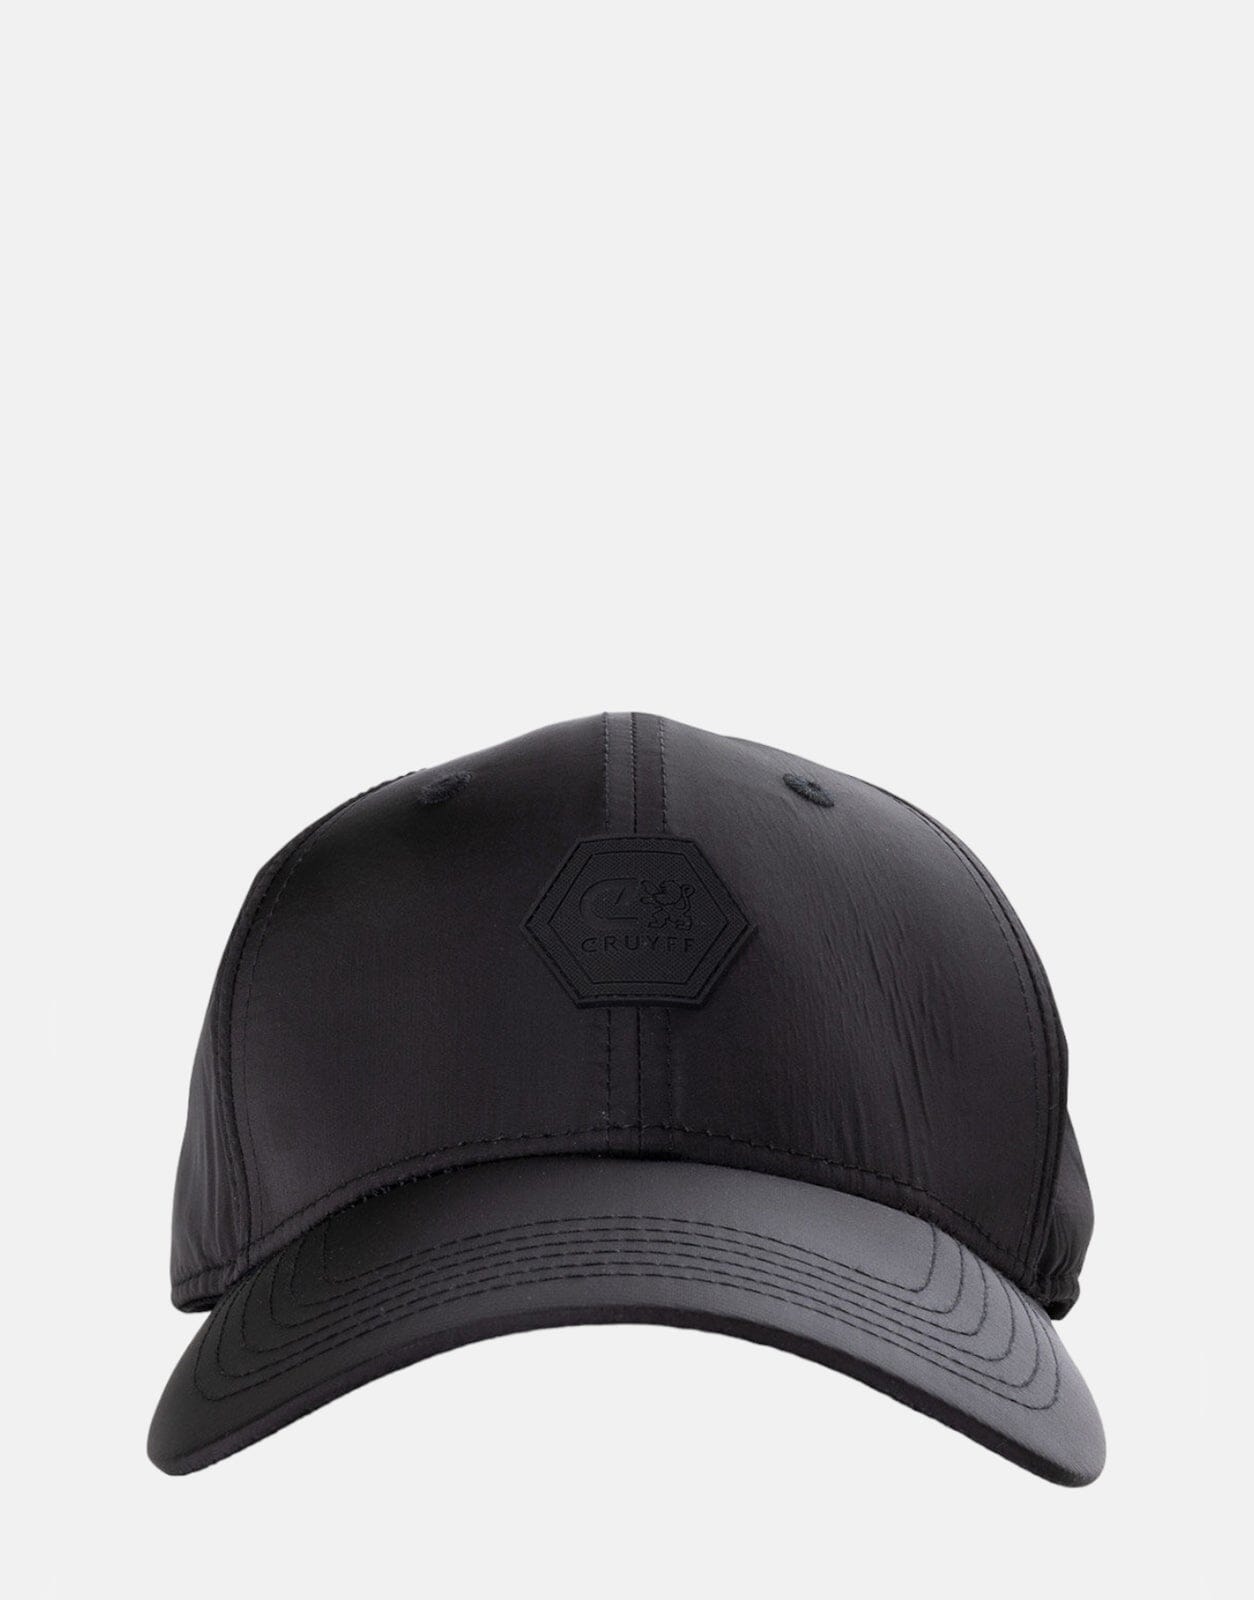 Cruyff Scott Pitch Black Cap - Subwear